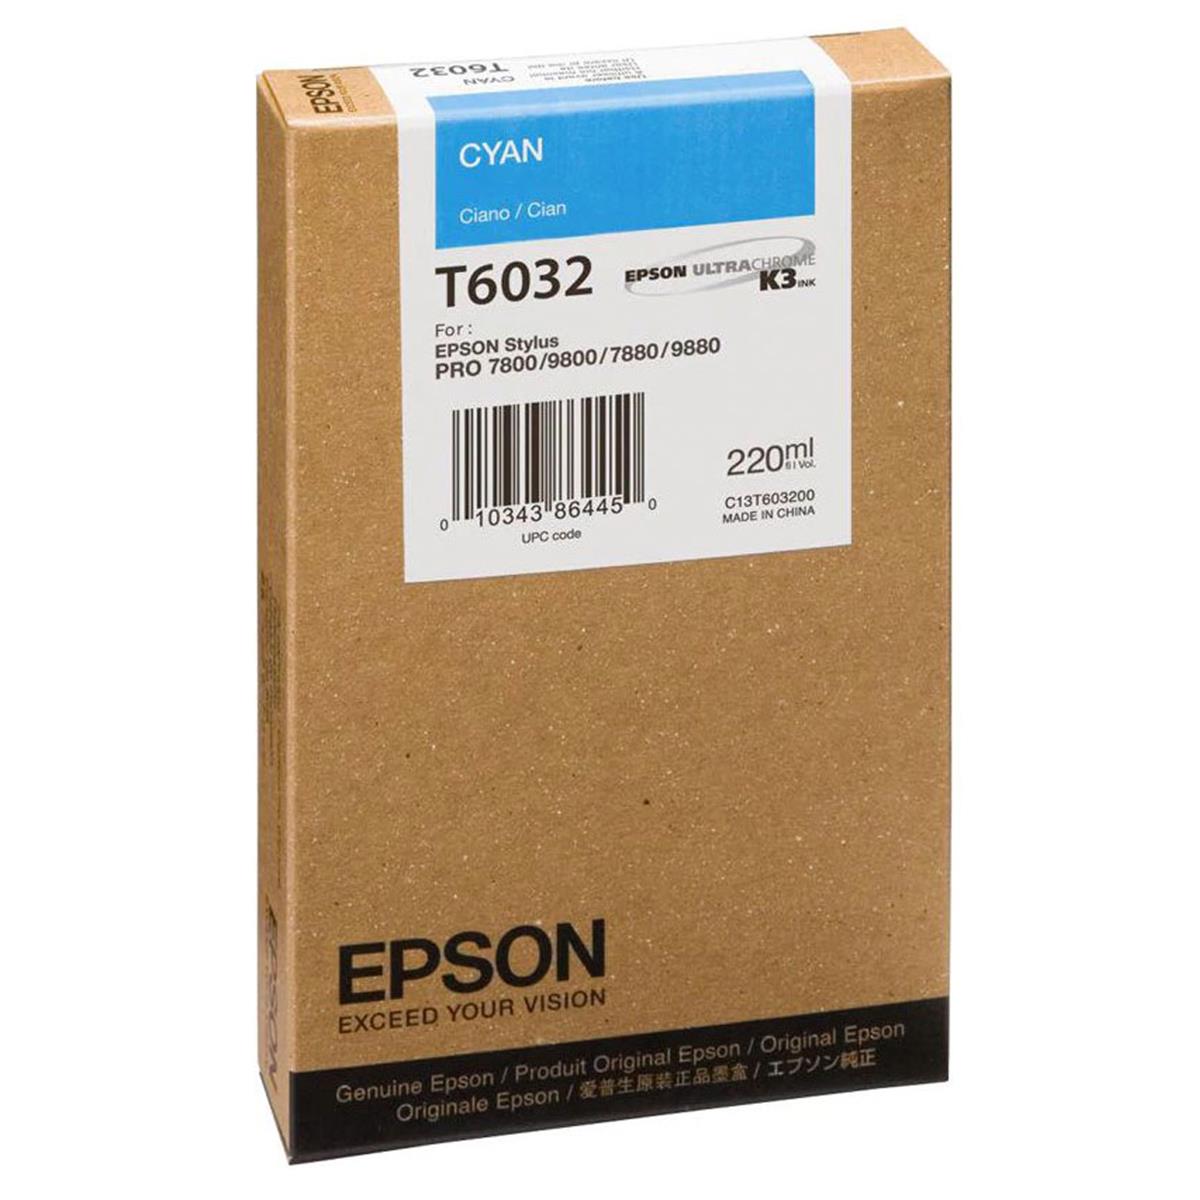 Image of Epson T603200 UltraChrome 220ml Printer Ink